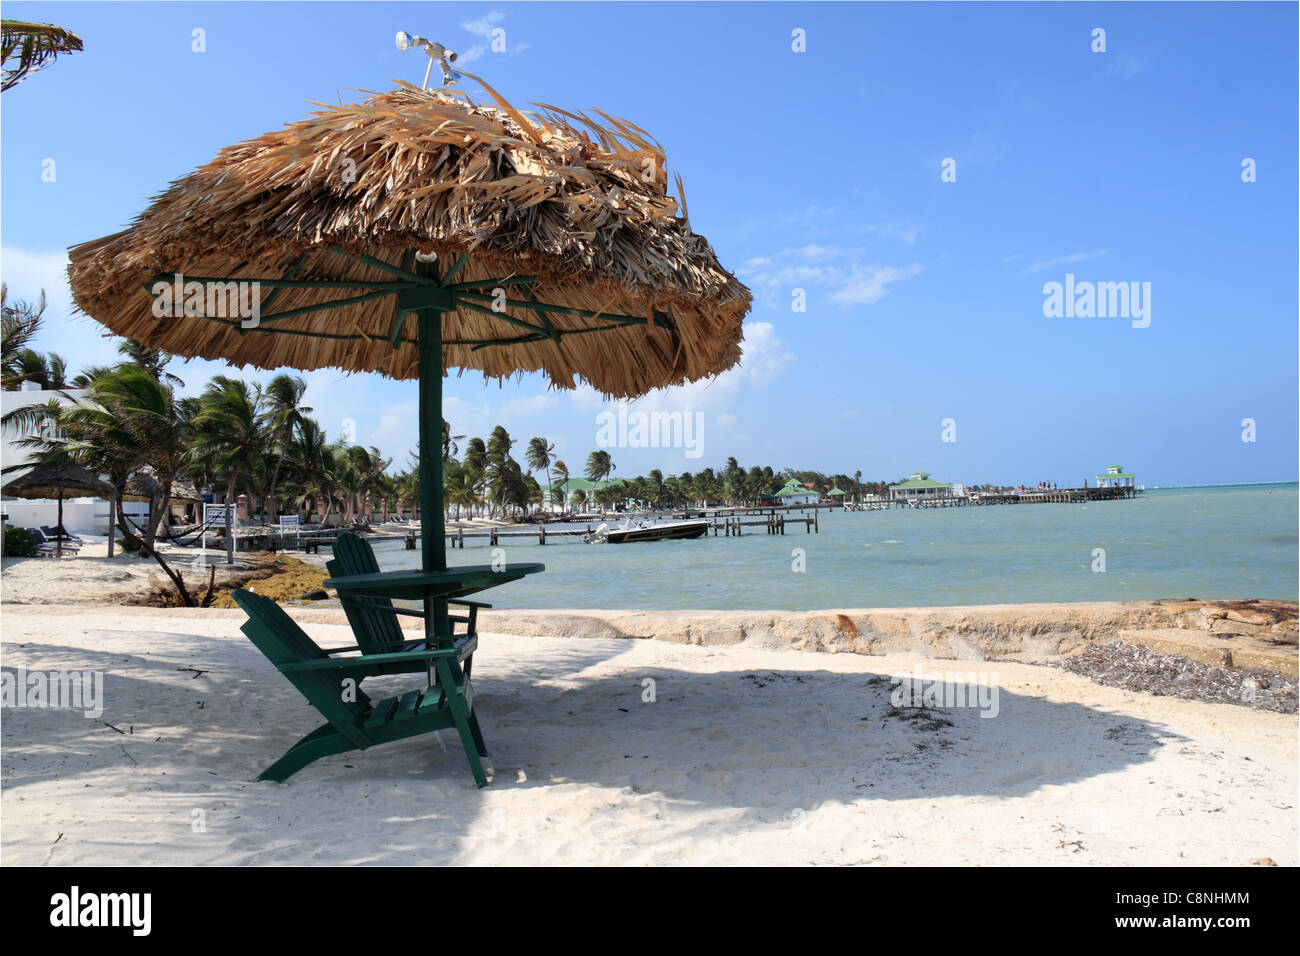 San Pedro, Ambergris Caye (aka La Isla Bonita/The Beautiful Island), Barrier Reef, Belize, Caribbean, Central America Stock Photo